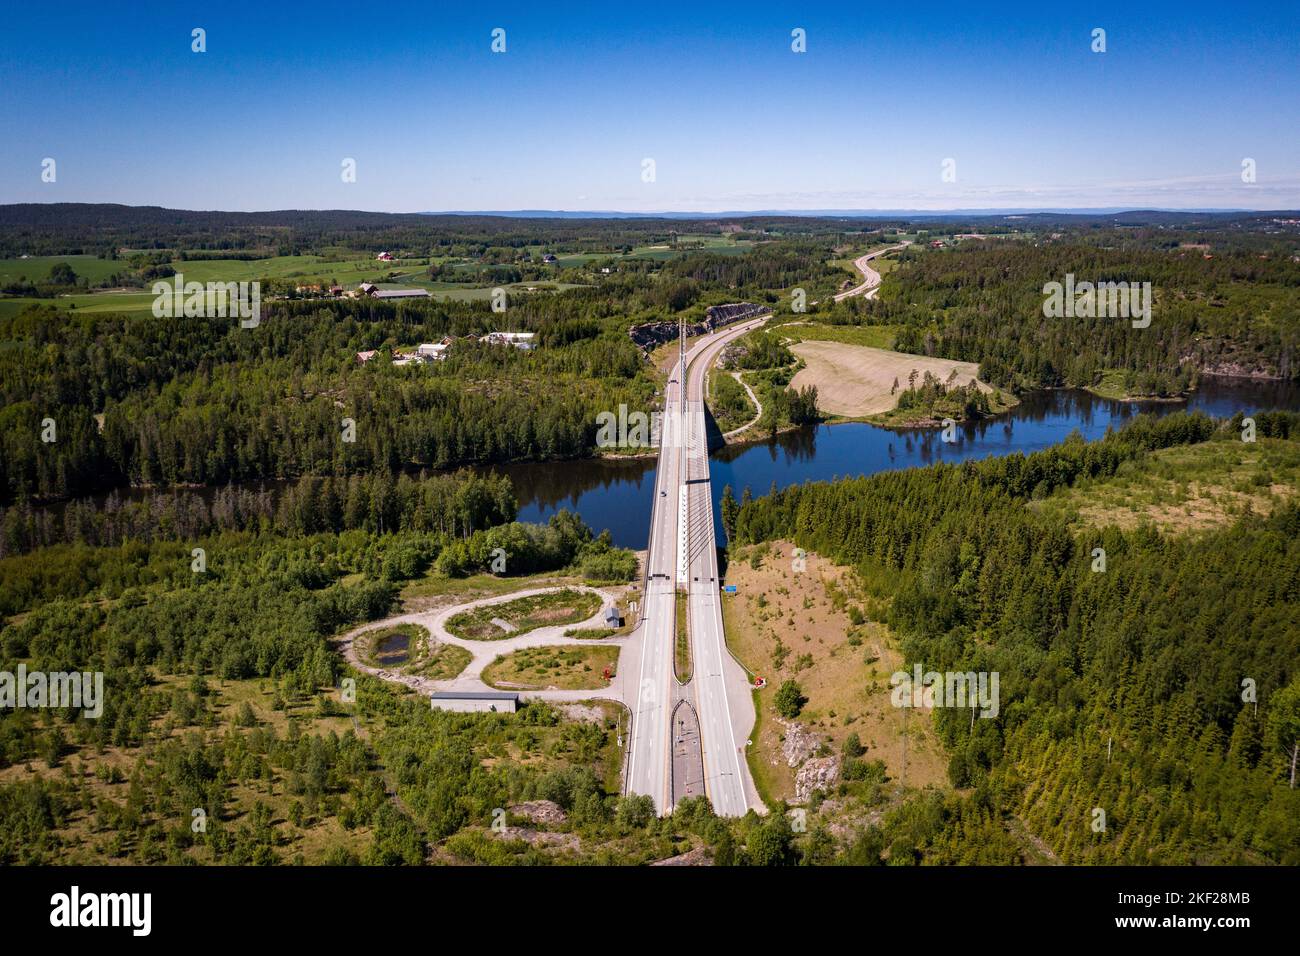 A scenic view of Smaalenene bridge over river Glomma between Spydeberg and Askim, Viken county, Norway Stock Photo